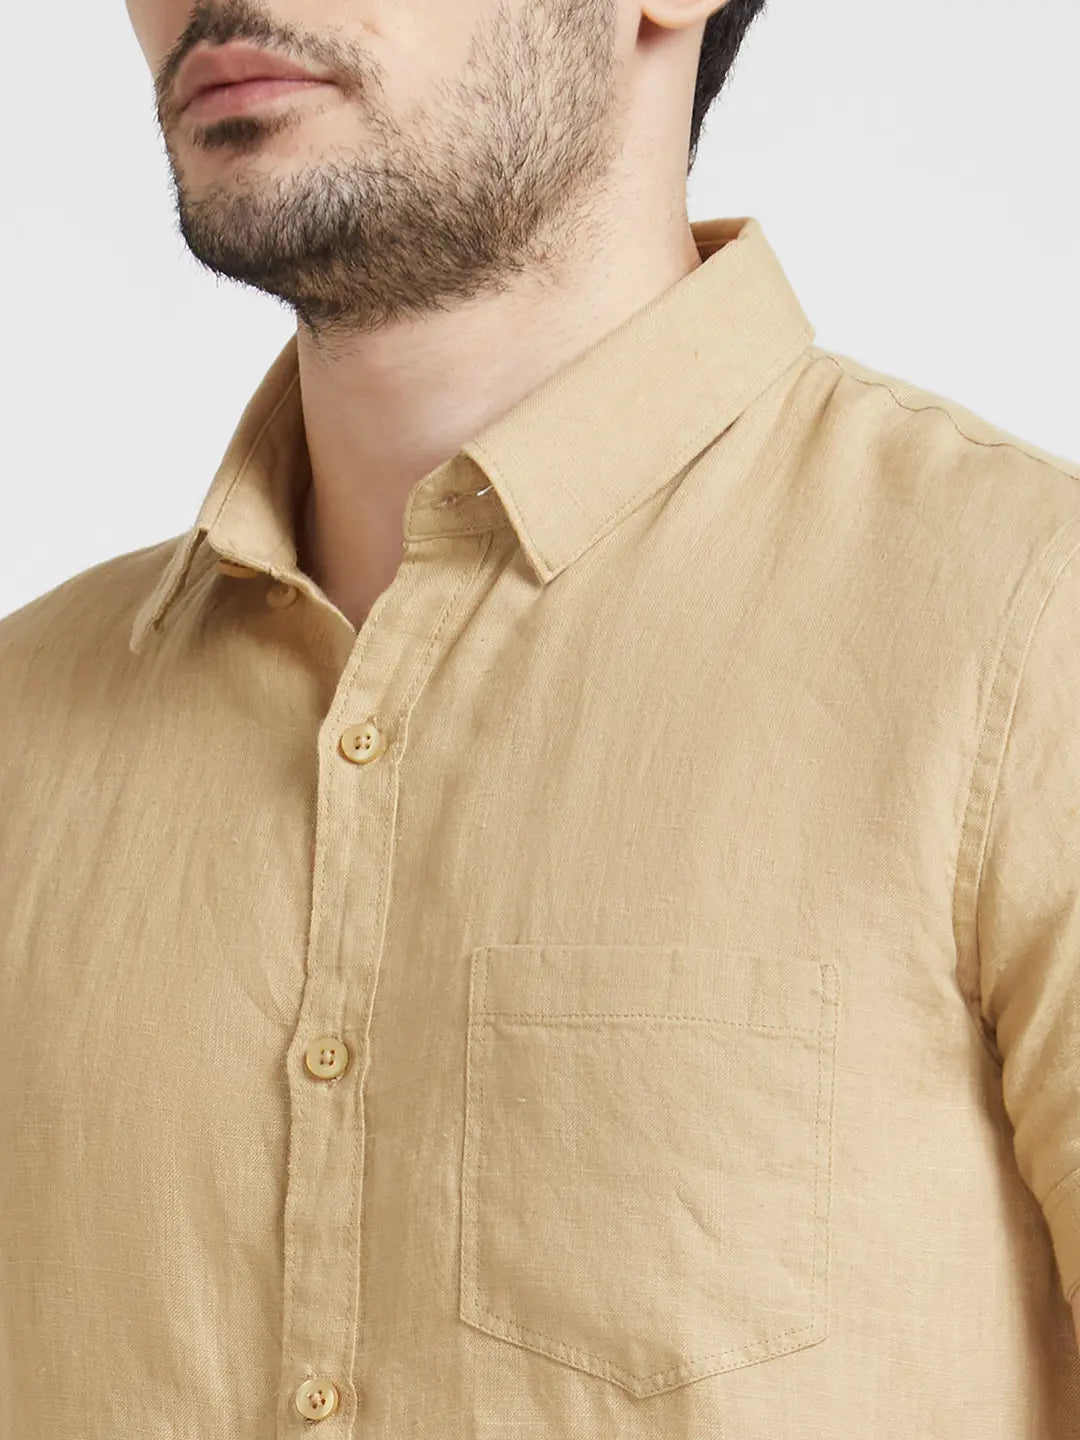 Spykar Men Camel Khaki Linen Regular Slim Fit Half Sleeve Plain Shirt